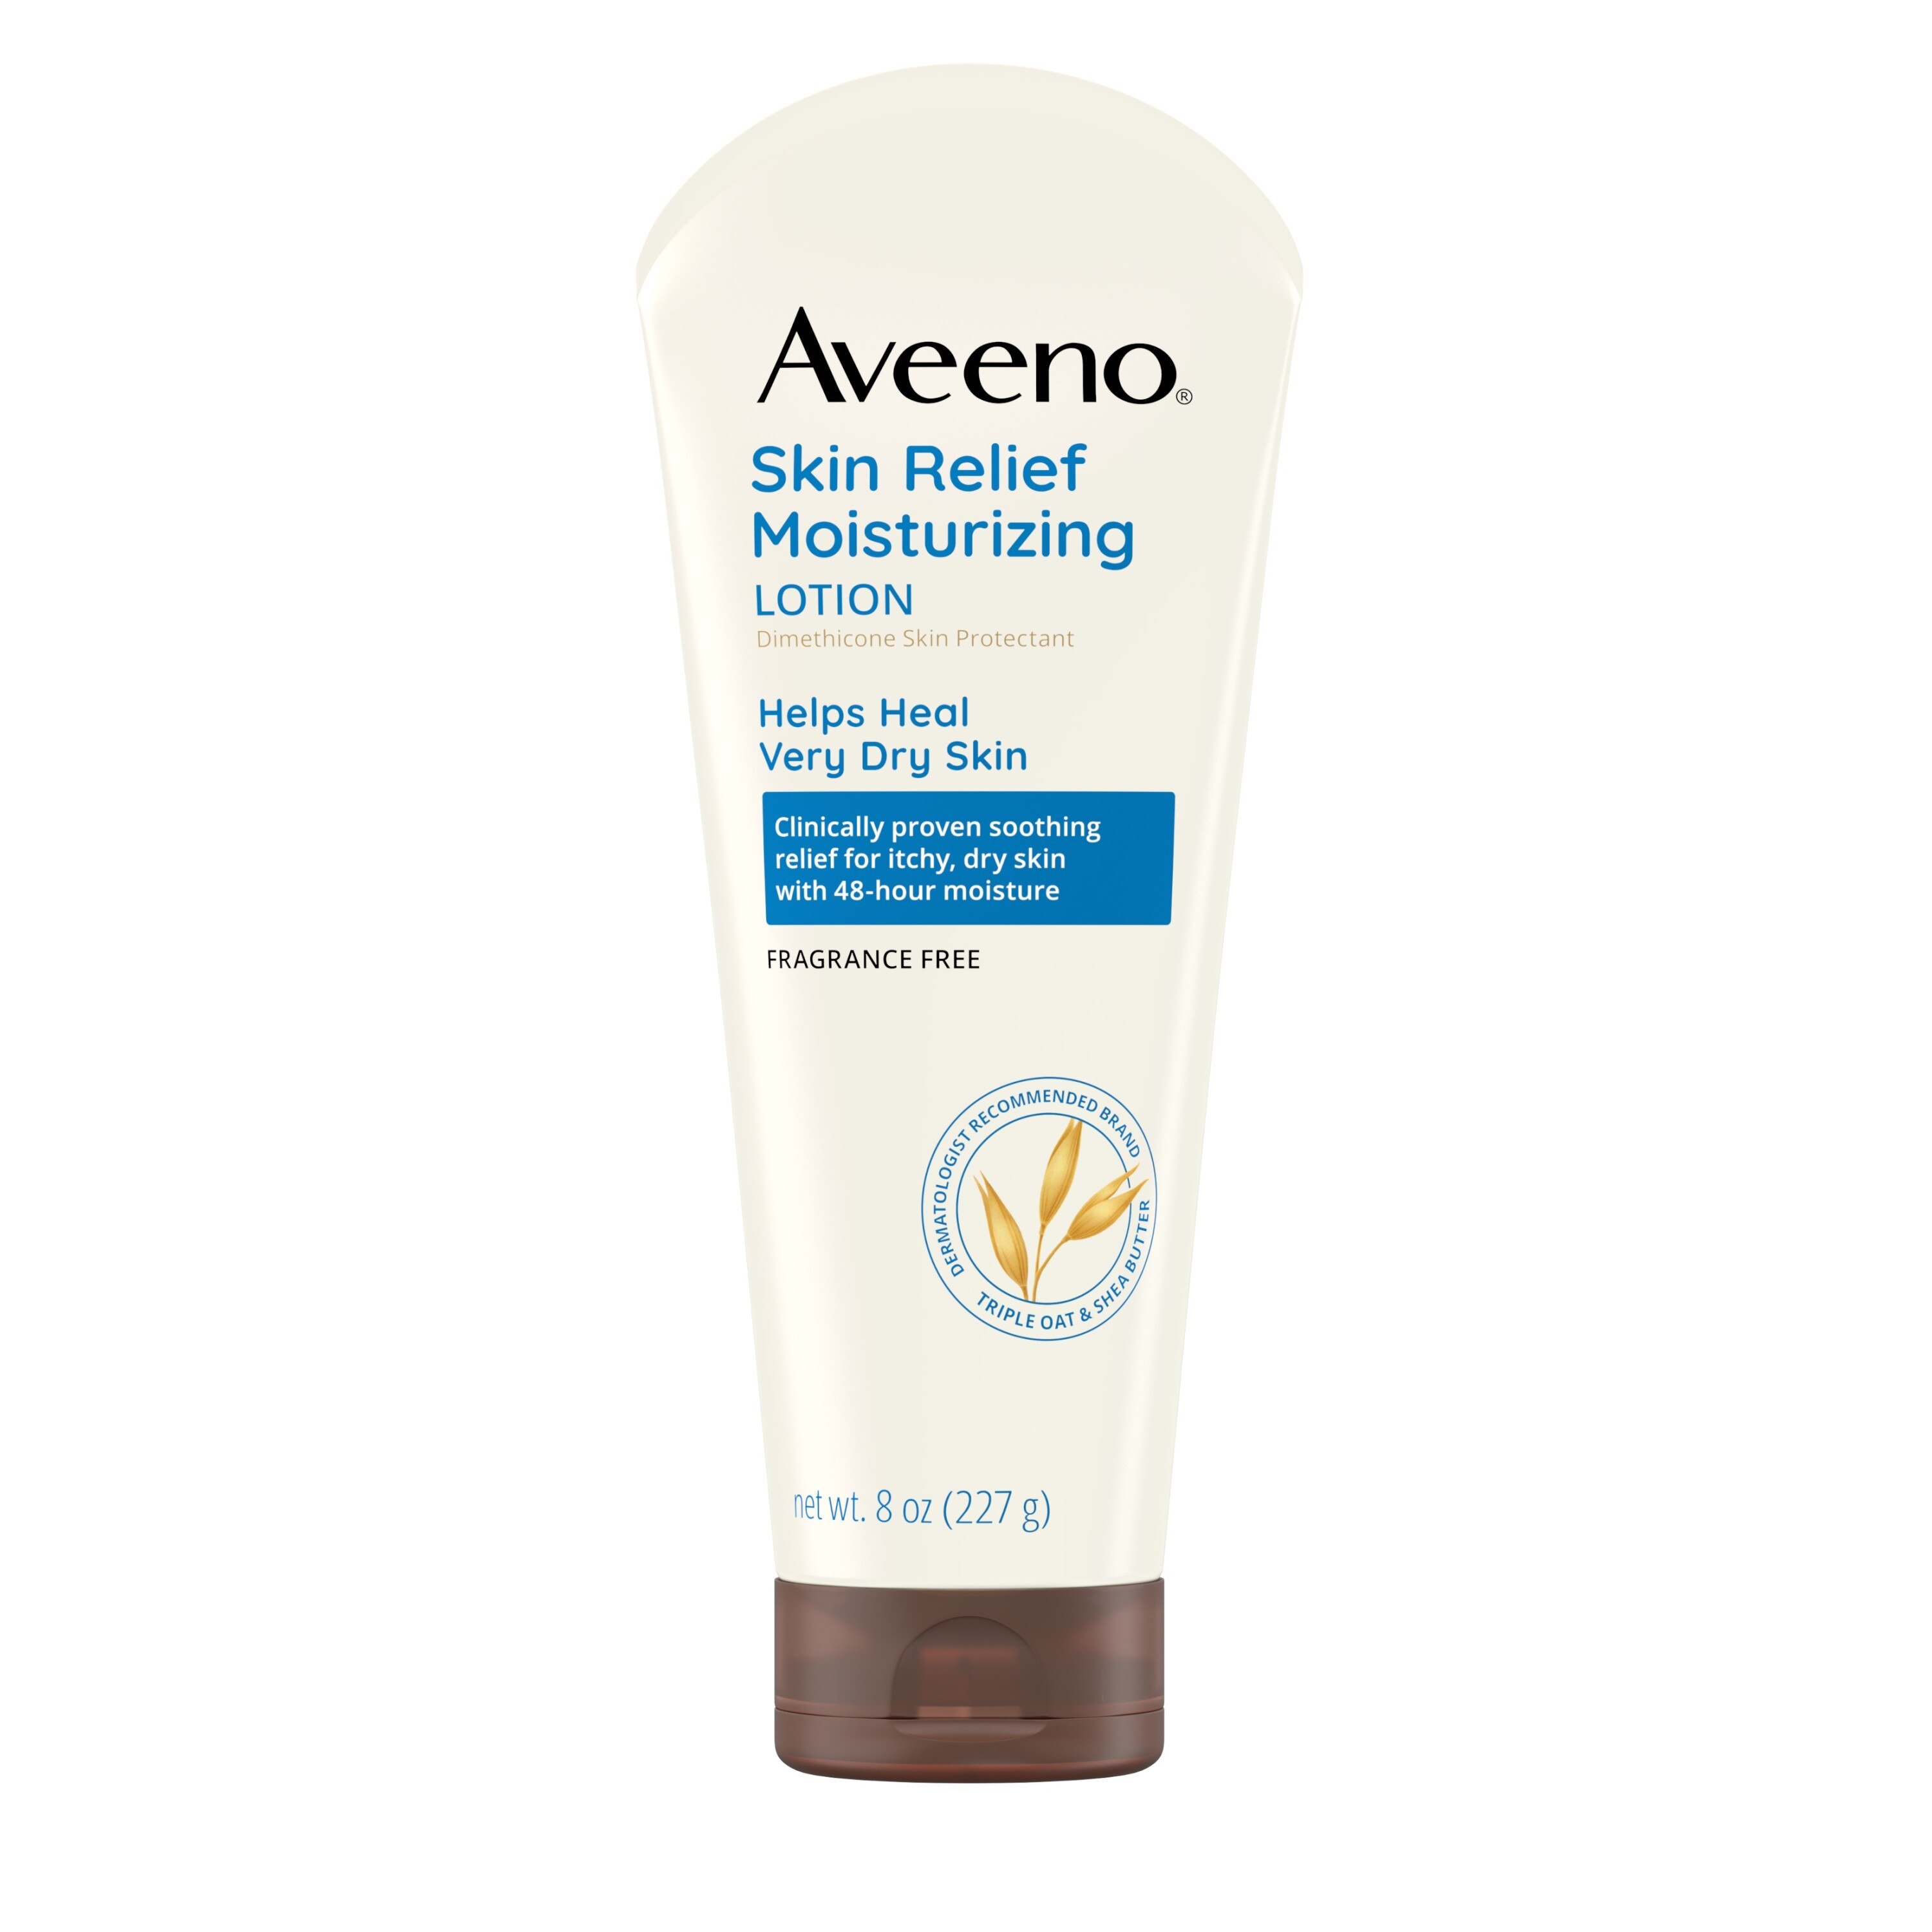 Aveeno Skin Relief Fragrance Free Moisturizing Lotion